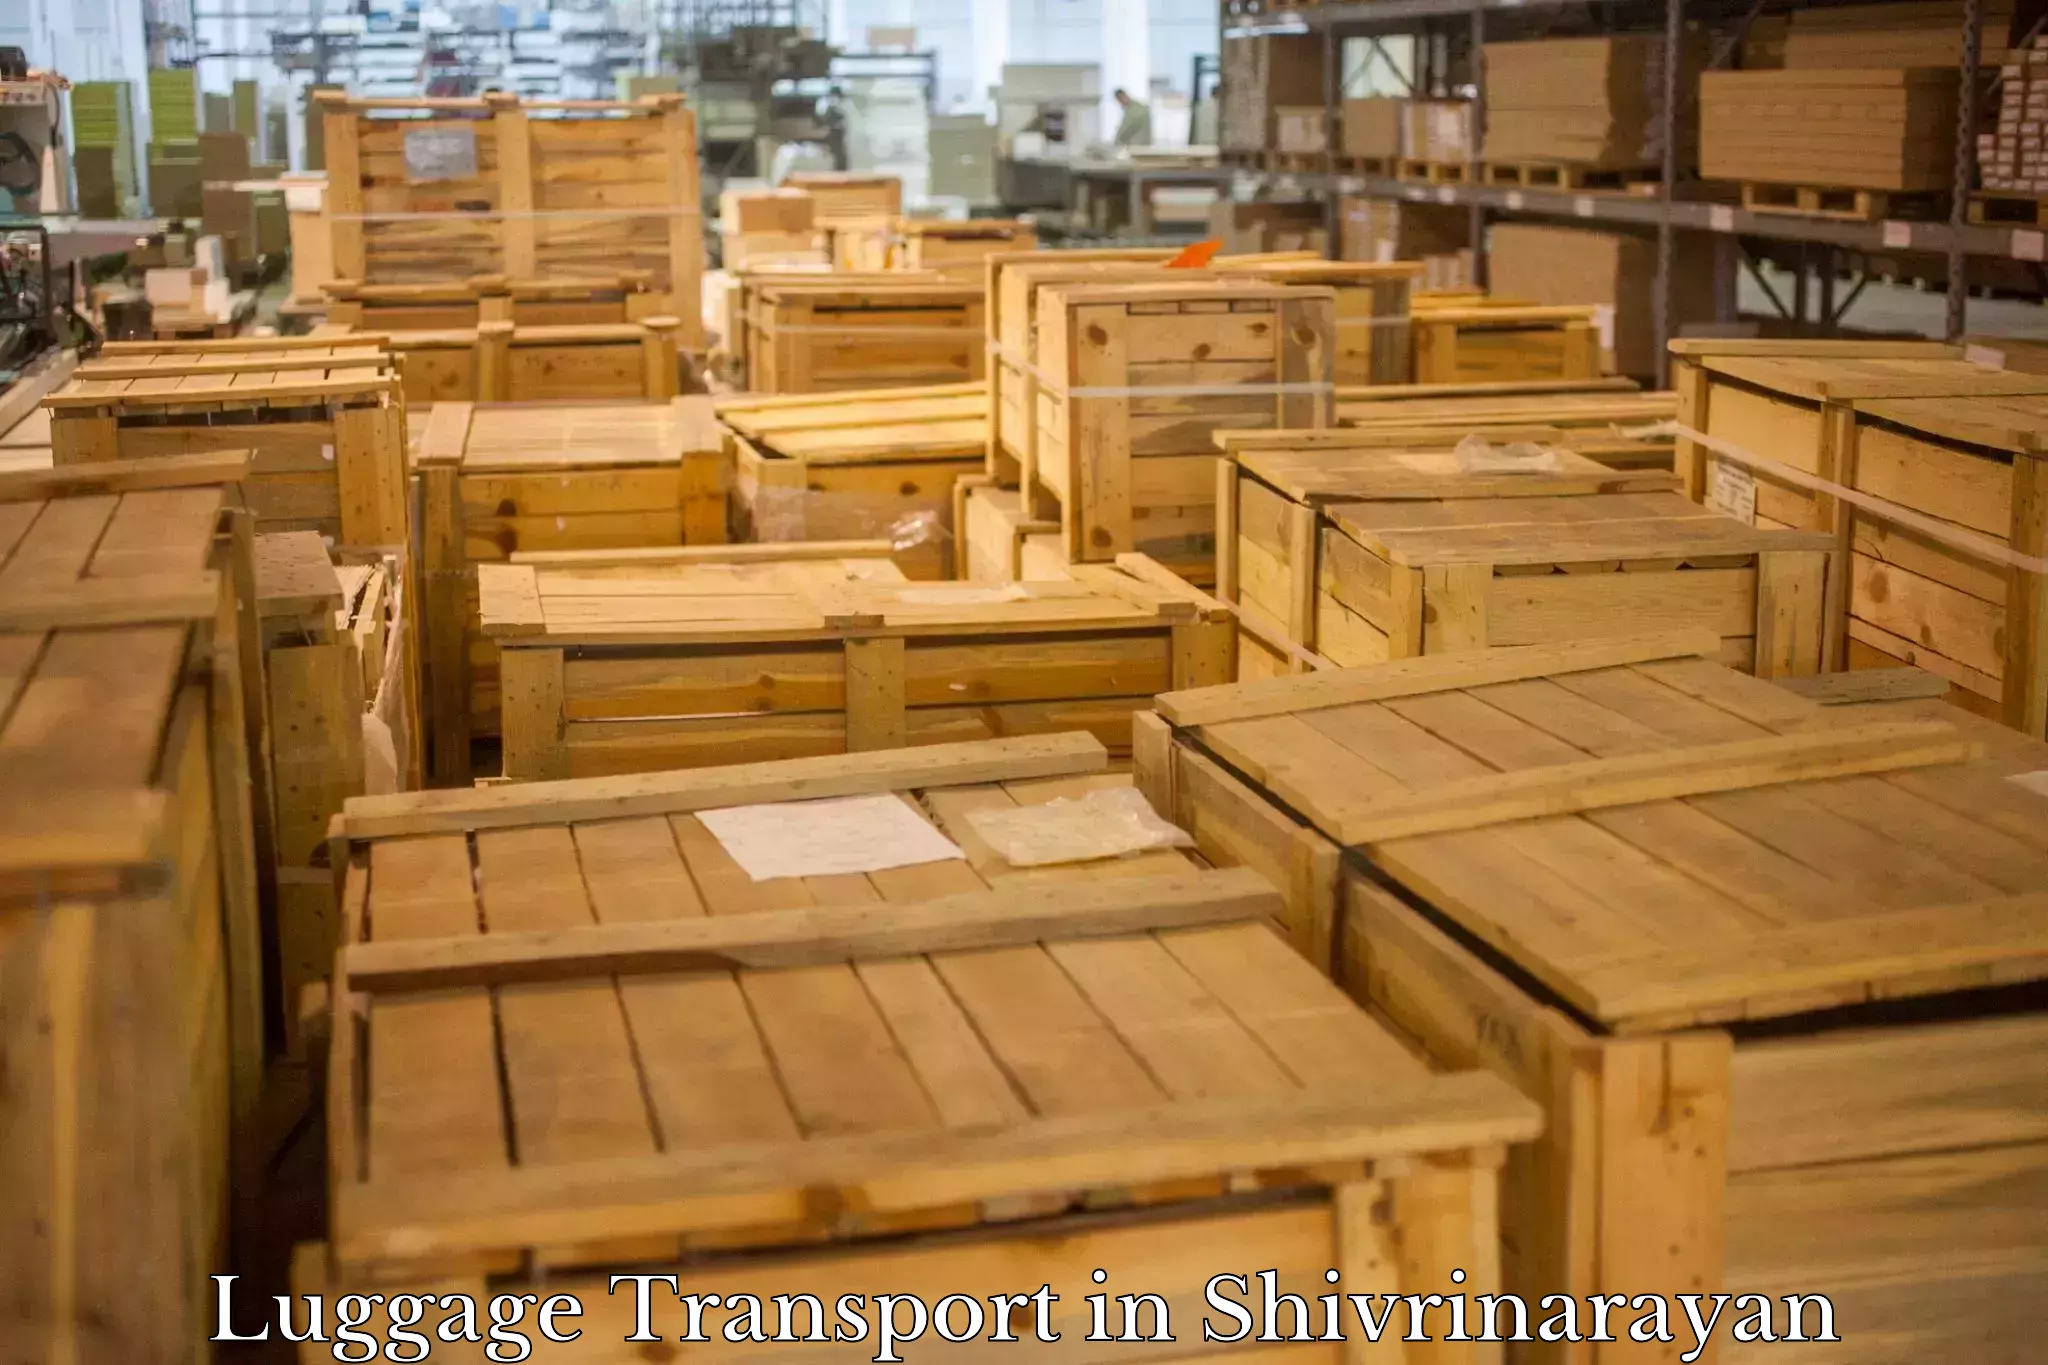 Tailored baggage transport in Shivrinarayan